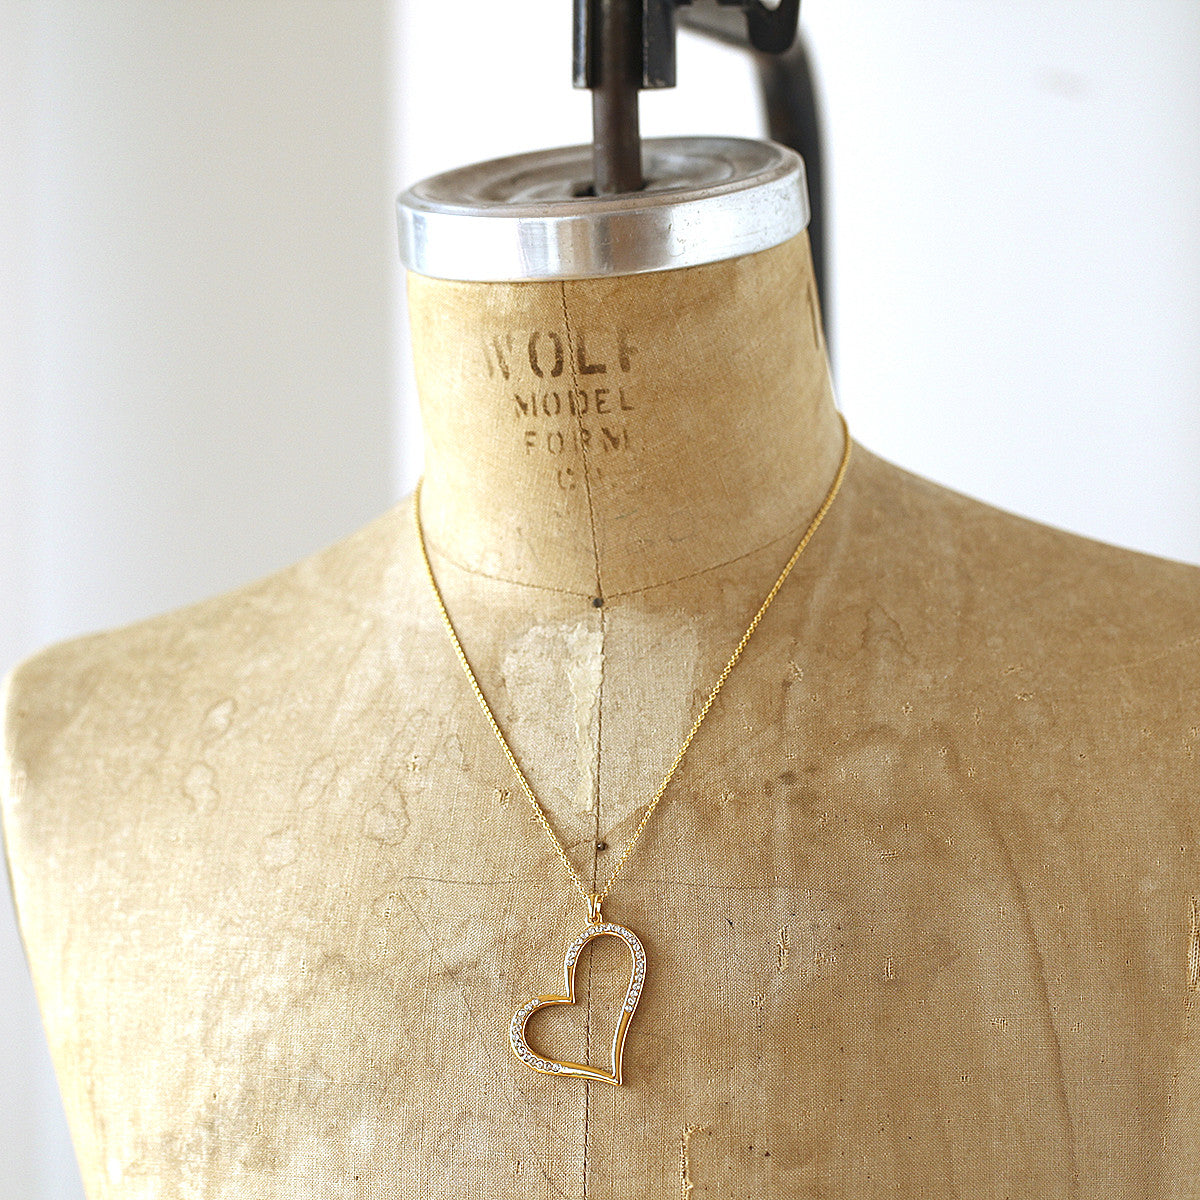 Large Heart Pendant Necklace with Premium CZ